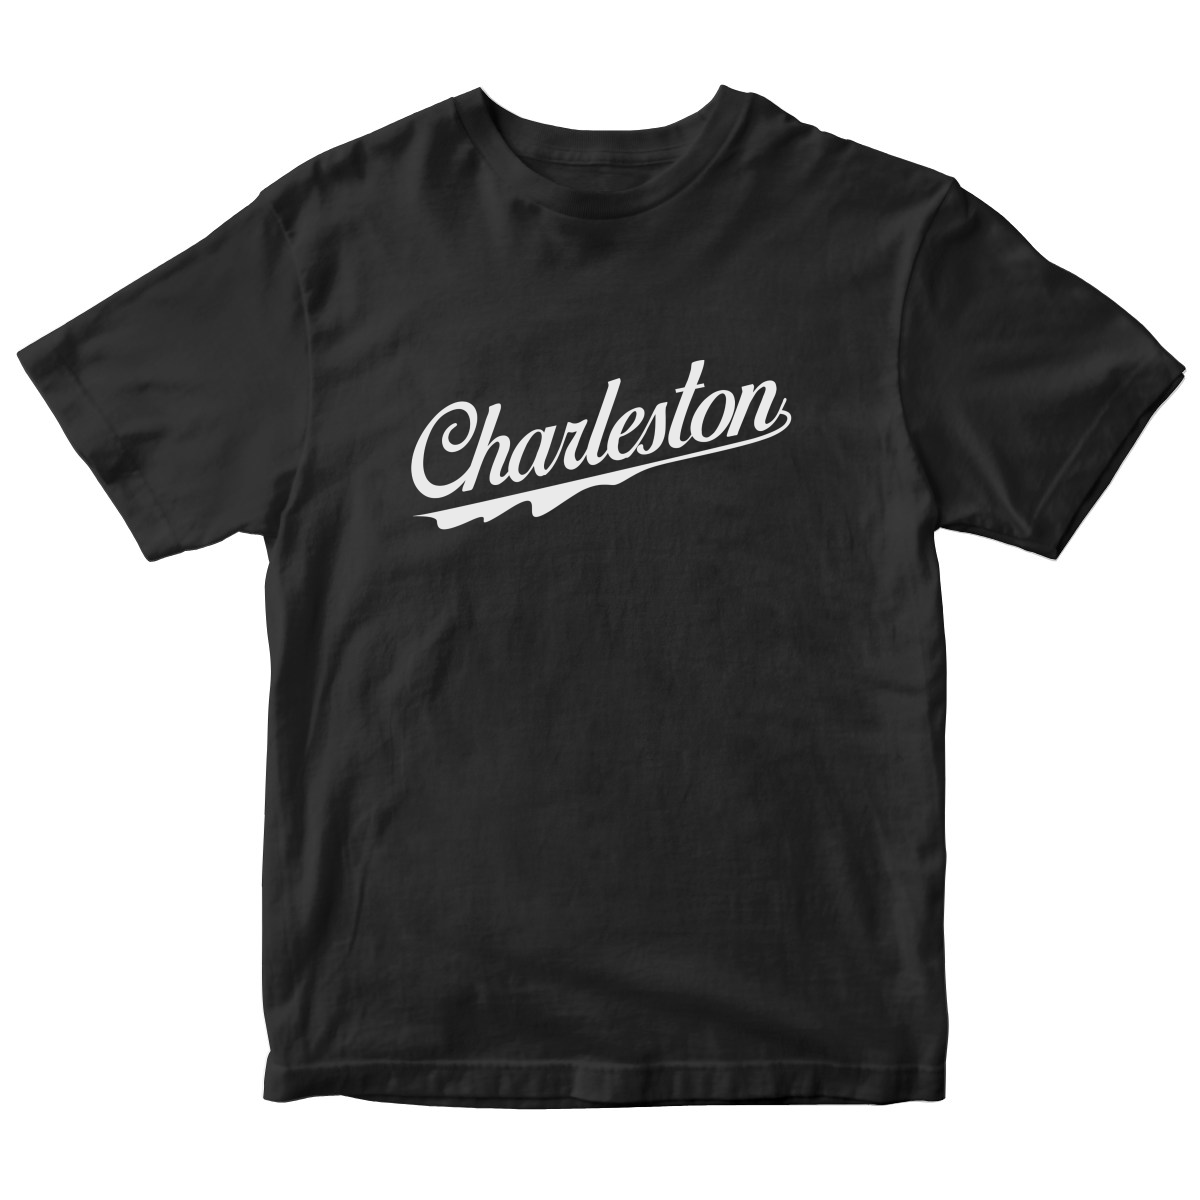 Charleston Kids T-shirt | Black